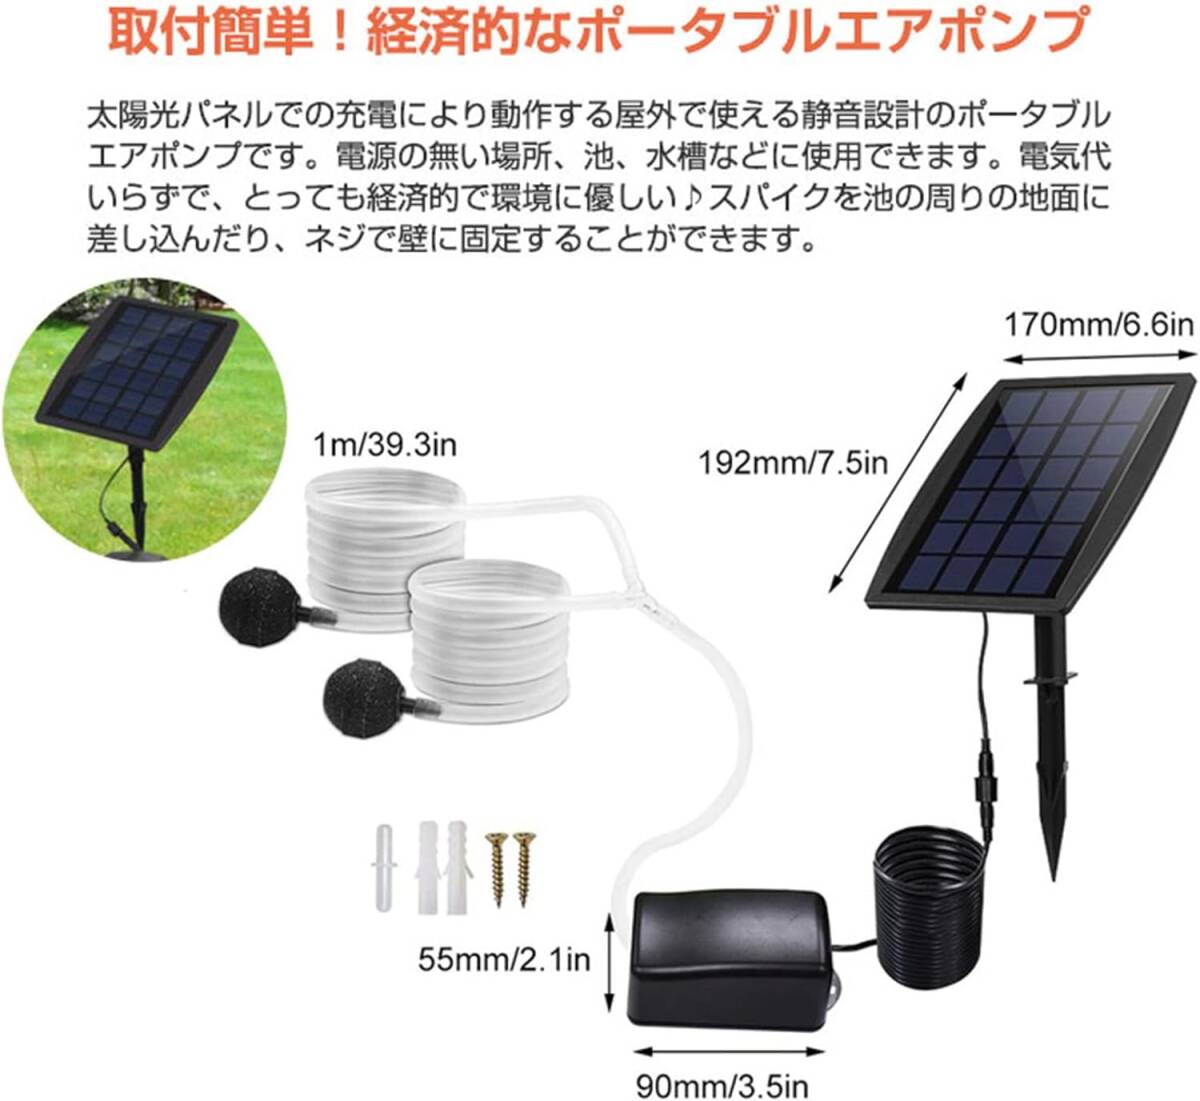  HUIZHOU ソーラーエアポンプ 充電式 2.5W太陽光パネル 静音設計 各種水槽の酸素供給 ビオトープ、庭池/生け簀/アクアリウム/魚タンクの画像5